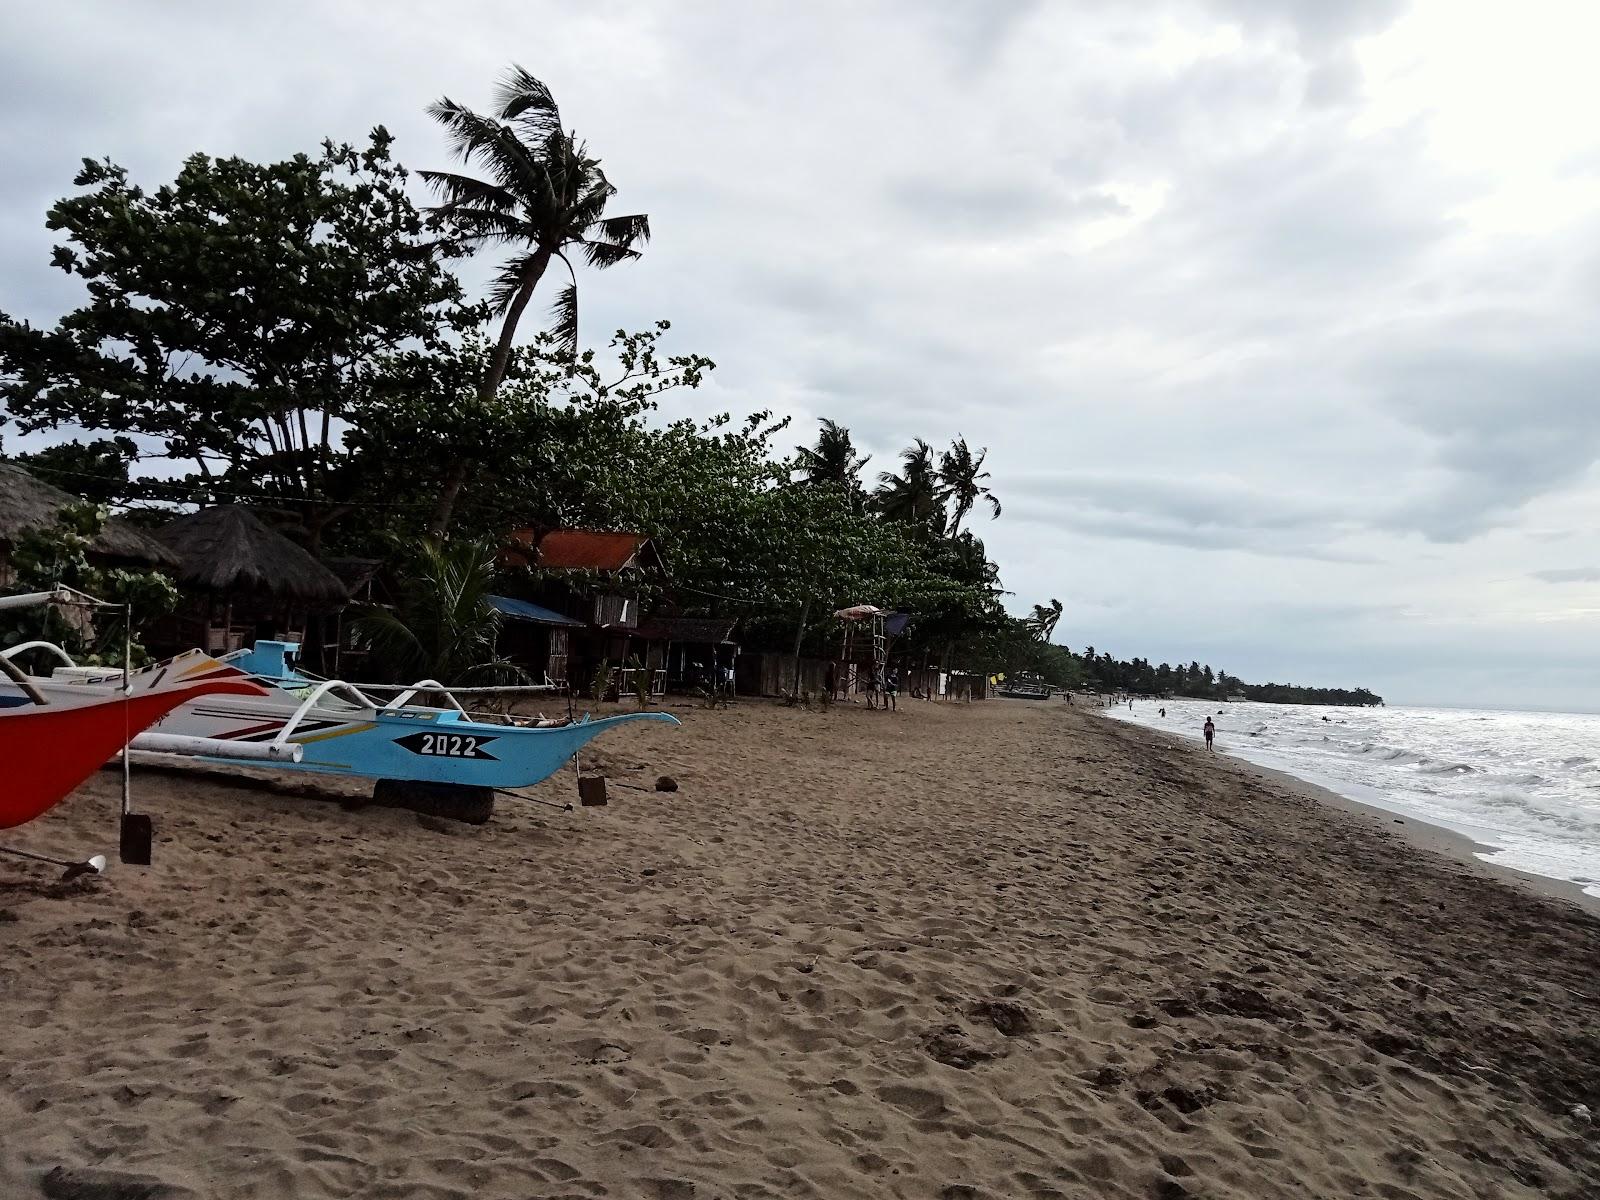 Sandee - Rge Kubo’S Nest Beach Resort - Palompon